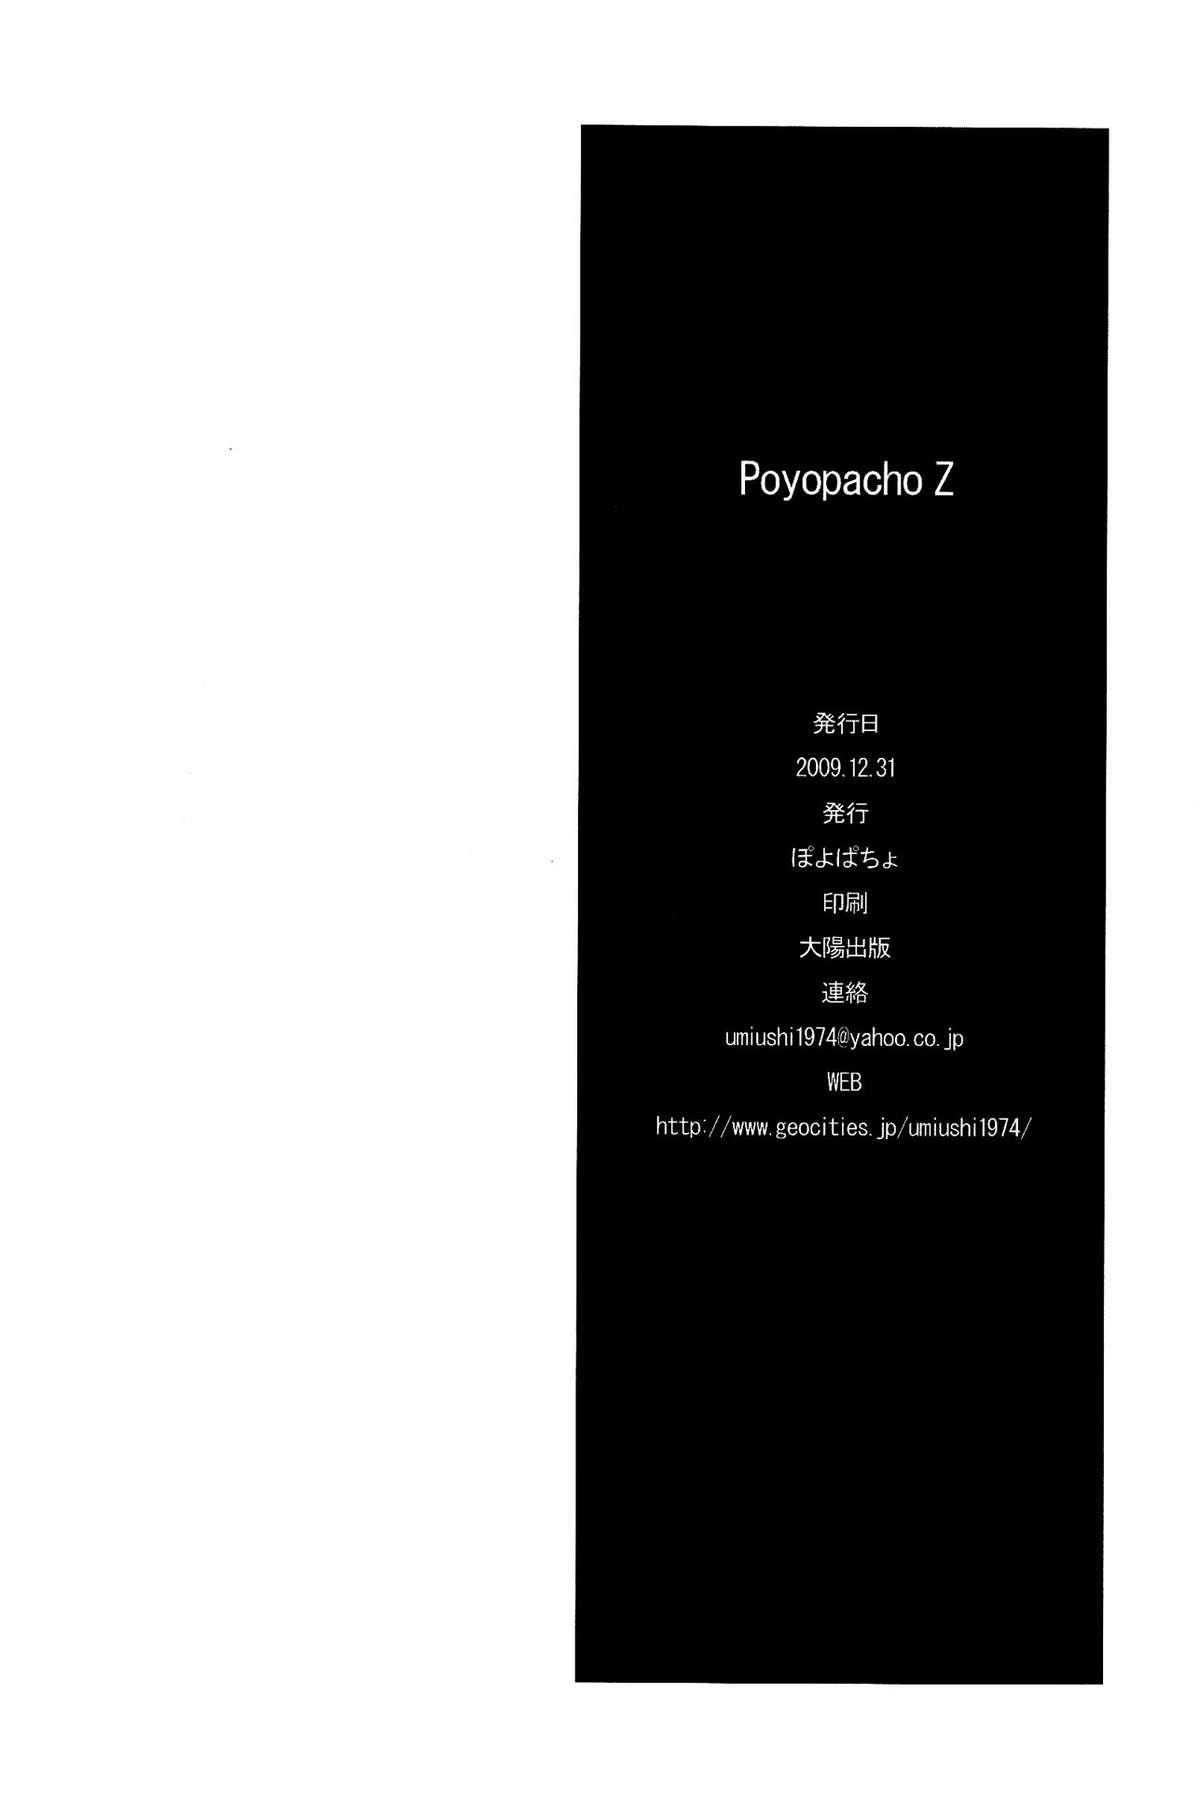 Poyopacho Z 26